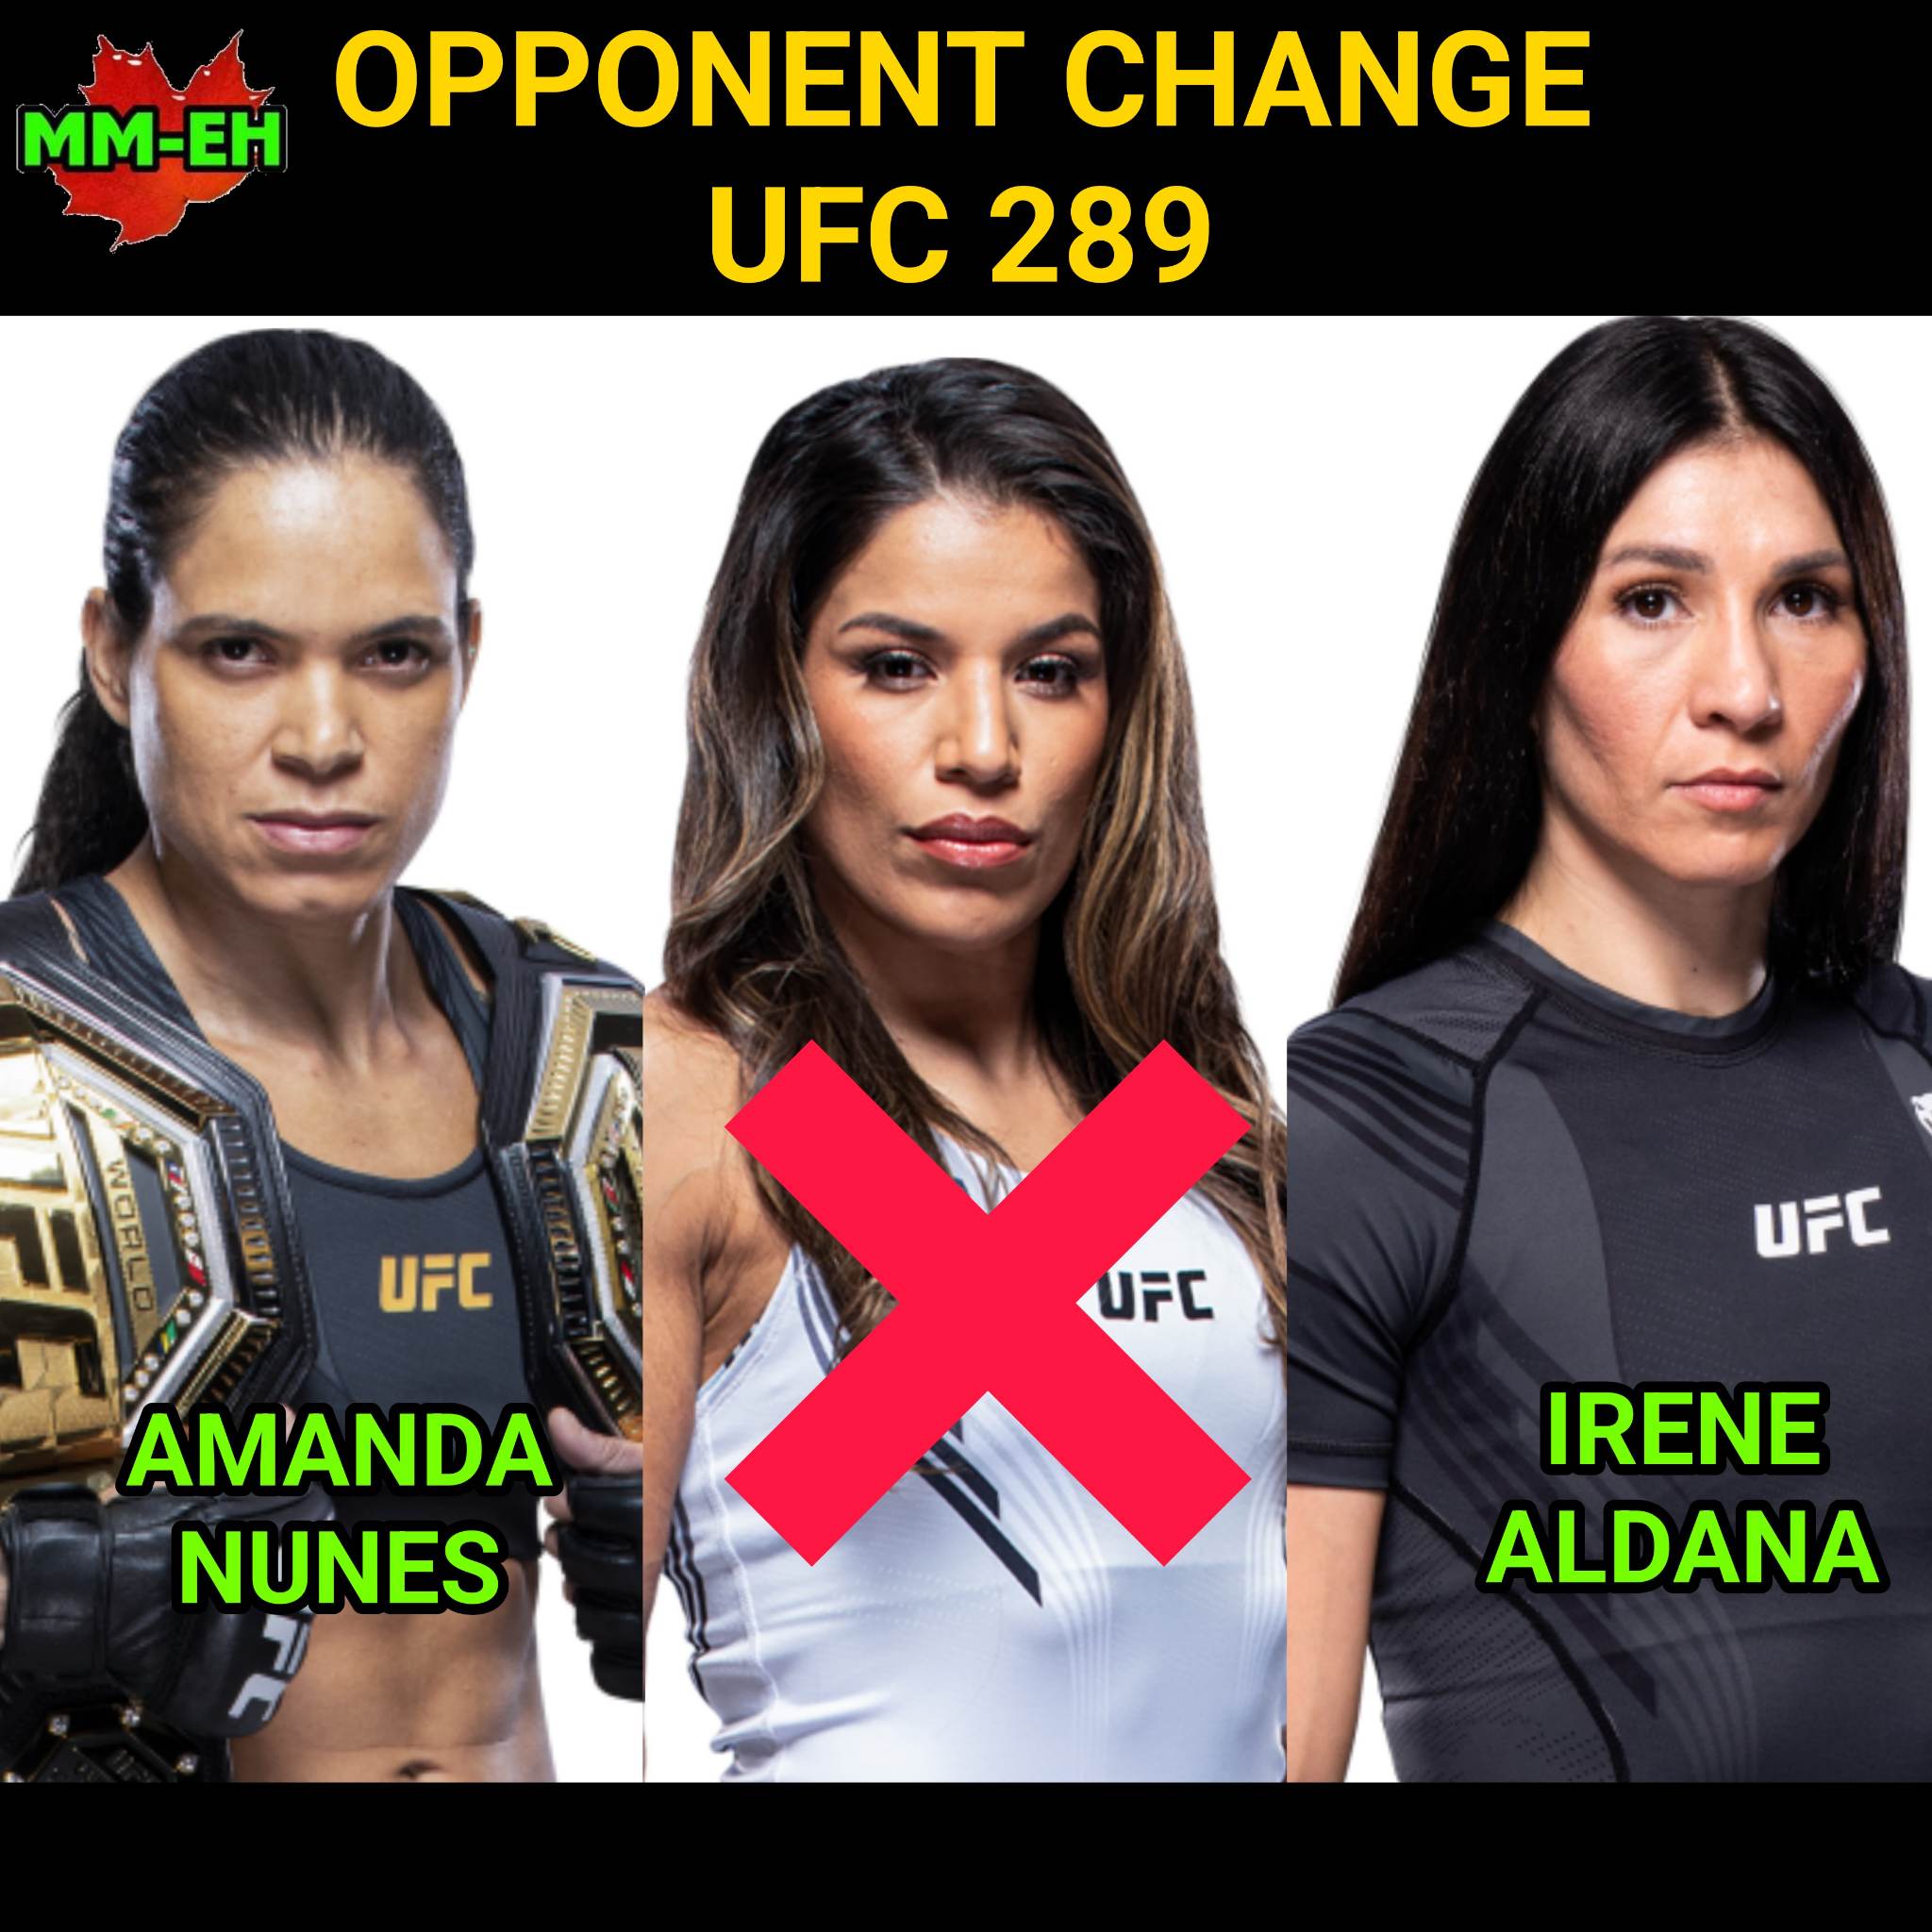 Nunes-Aldana UFC 289 MM-eh